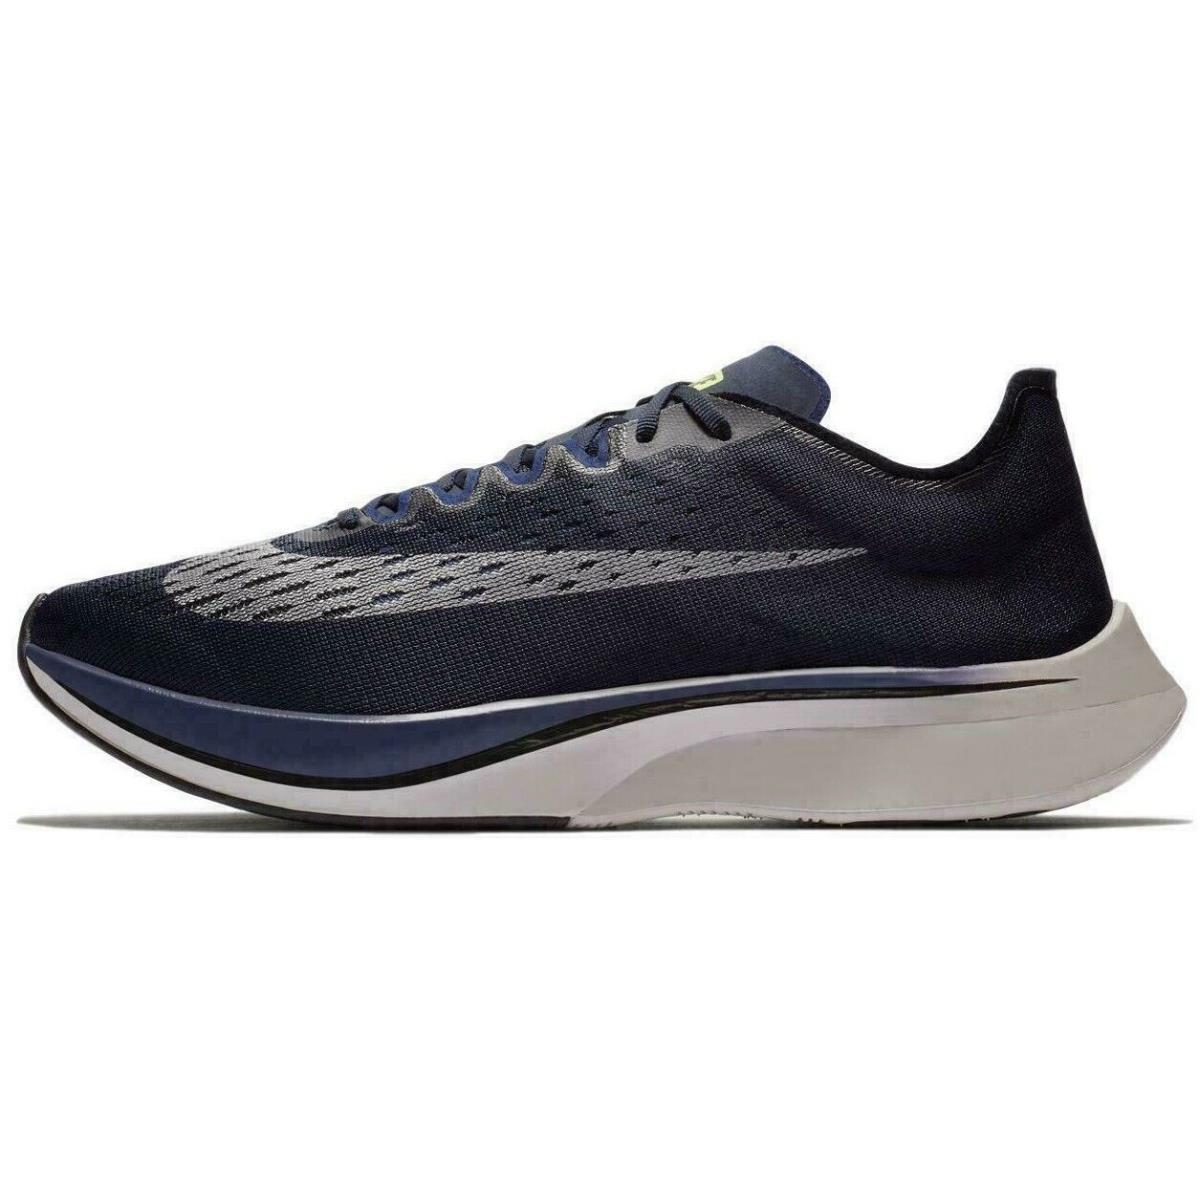 Nike Zoom Vaporfly 4% - - 880847-405 Navy Obsidian Silver Grey Vap - Blue